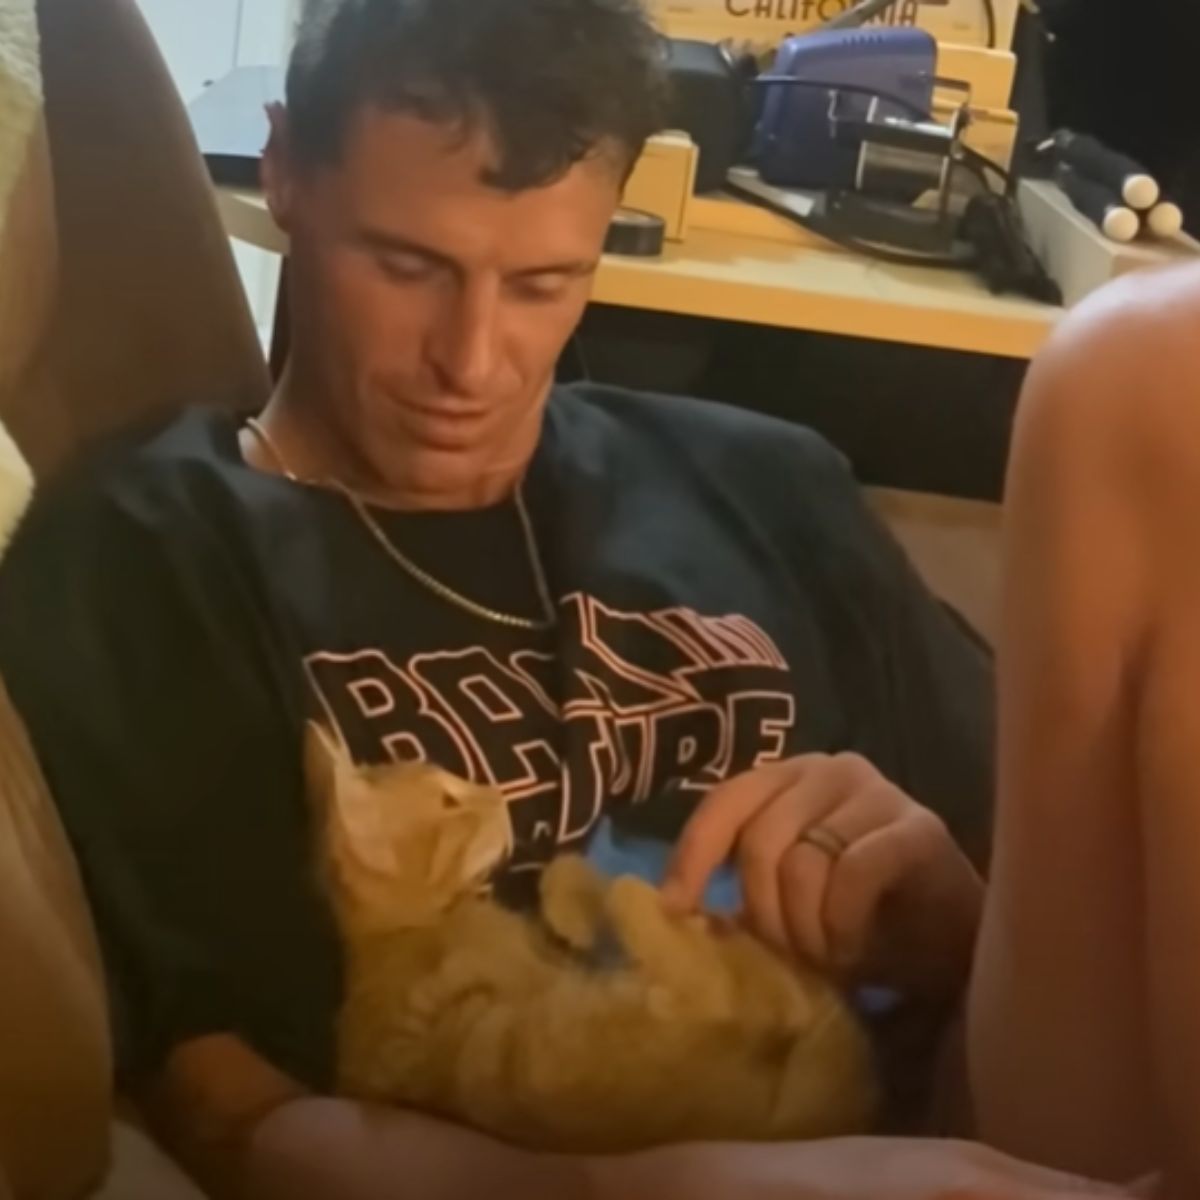 man cuddling with cat